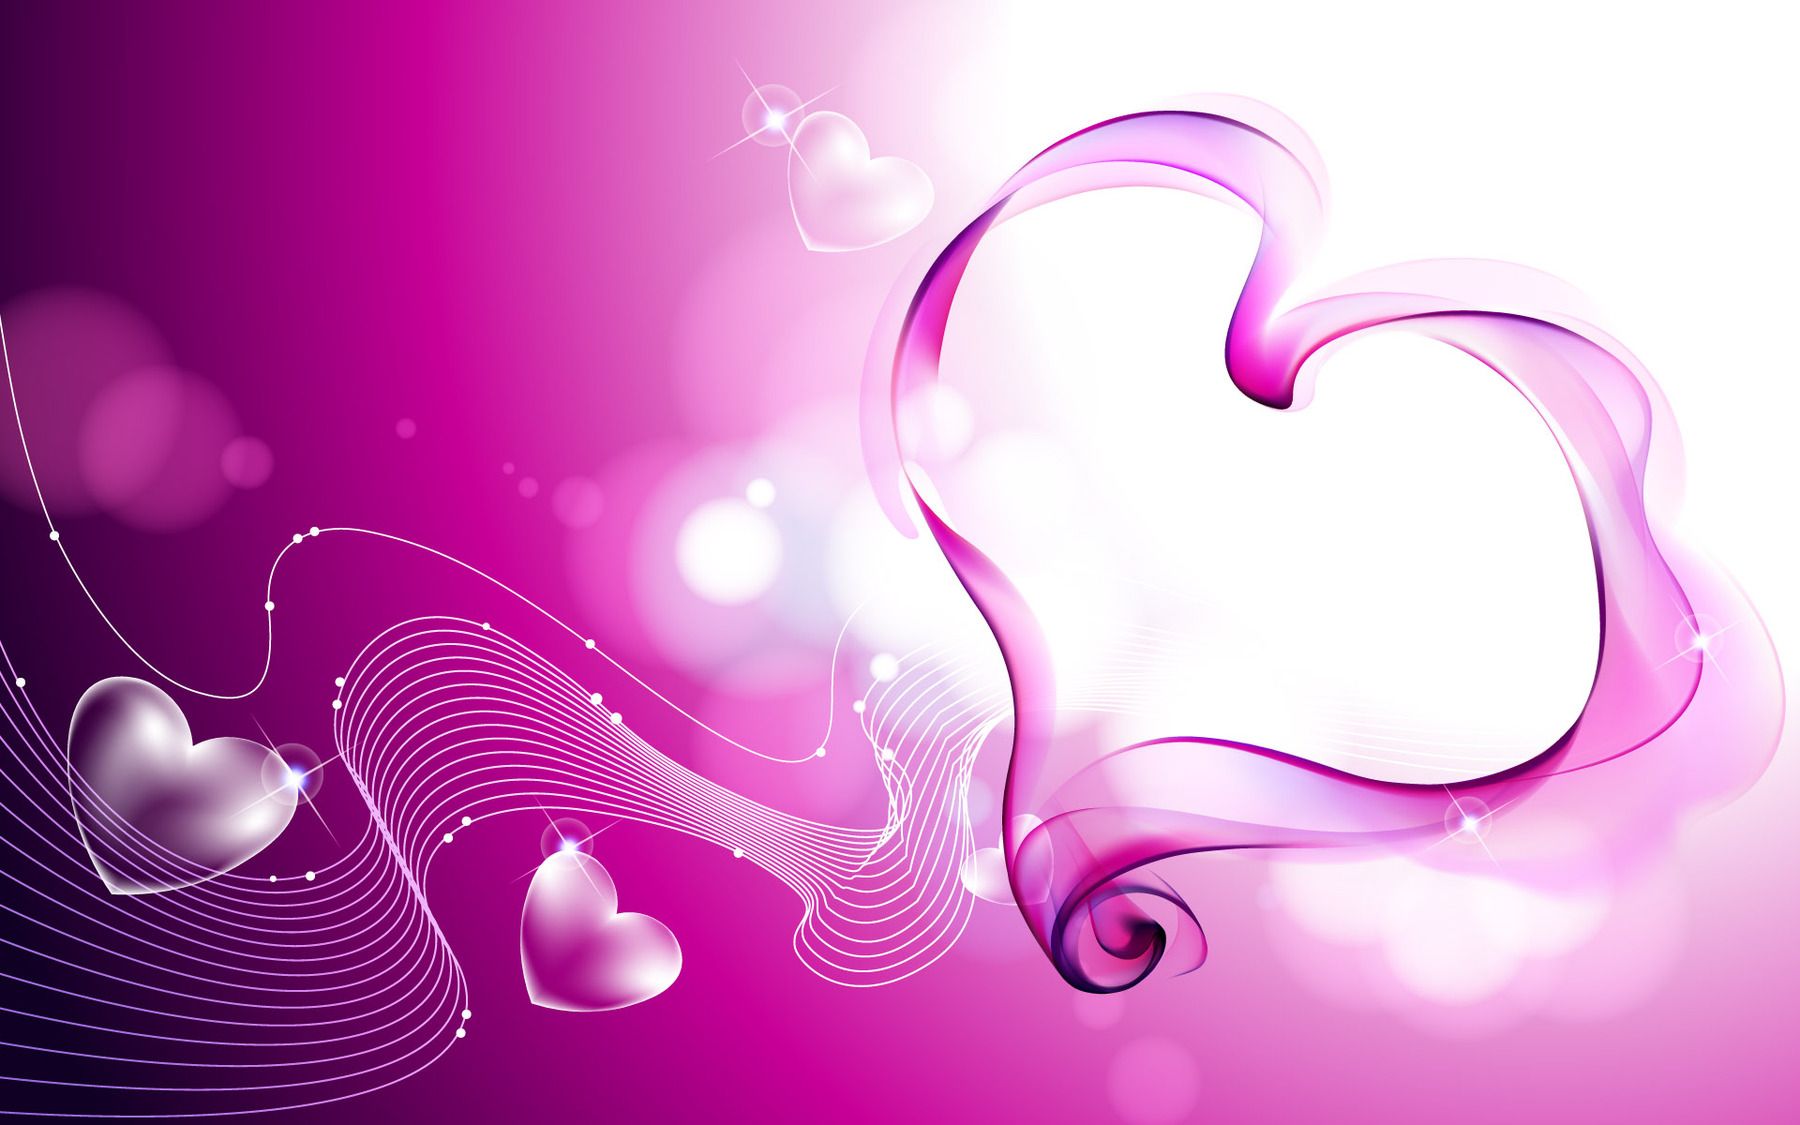 Free Sweet Love Heart wallpaper Wallpapers - HD Wallpapers 89819